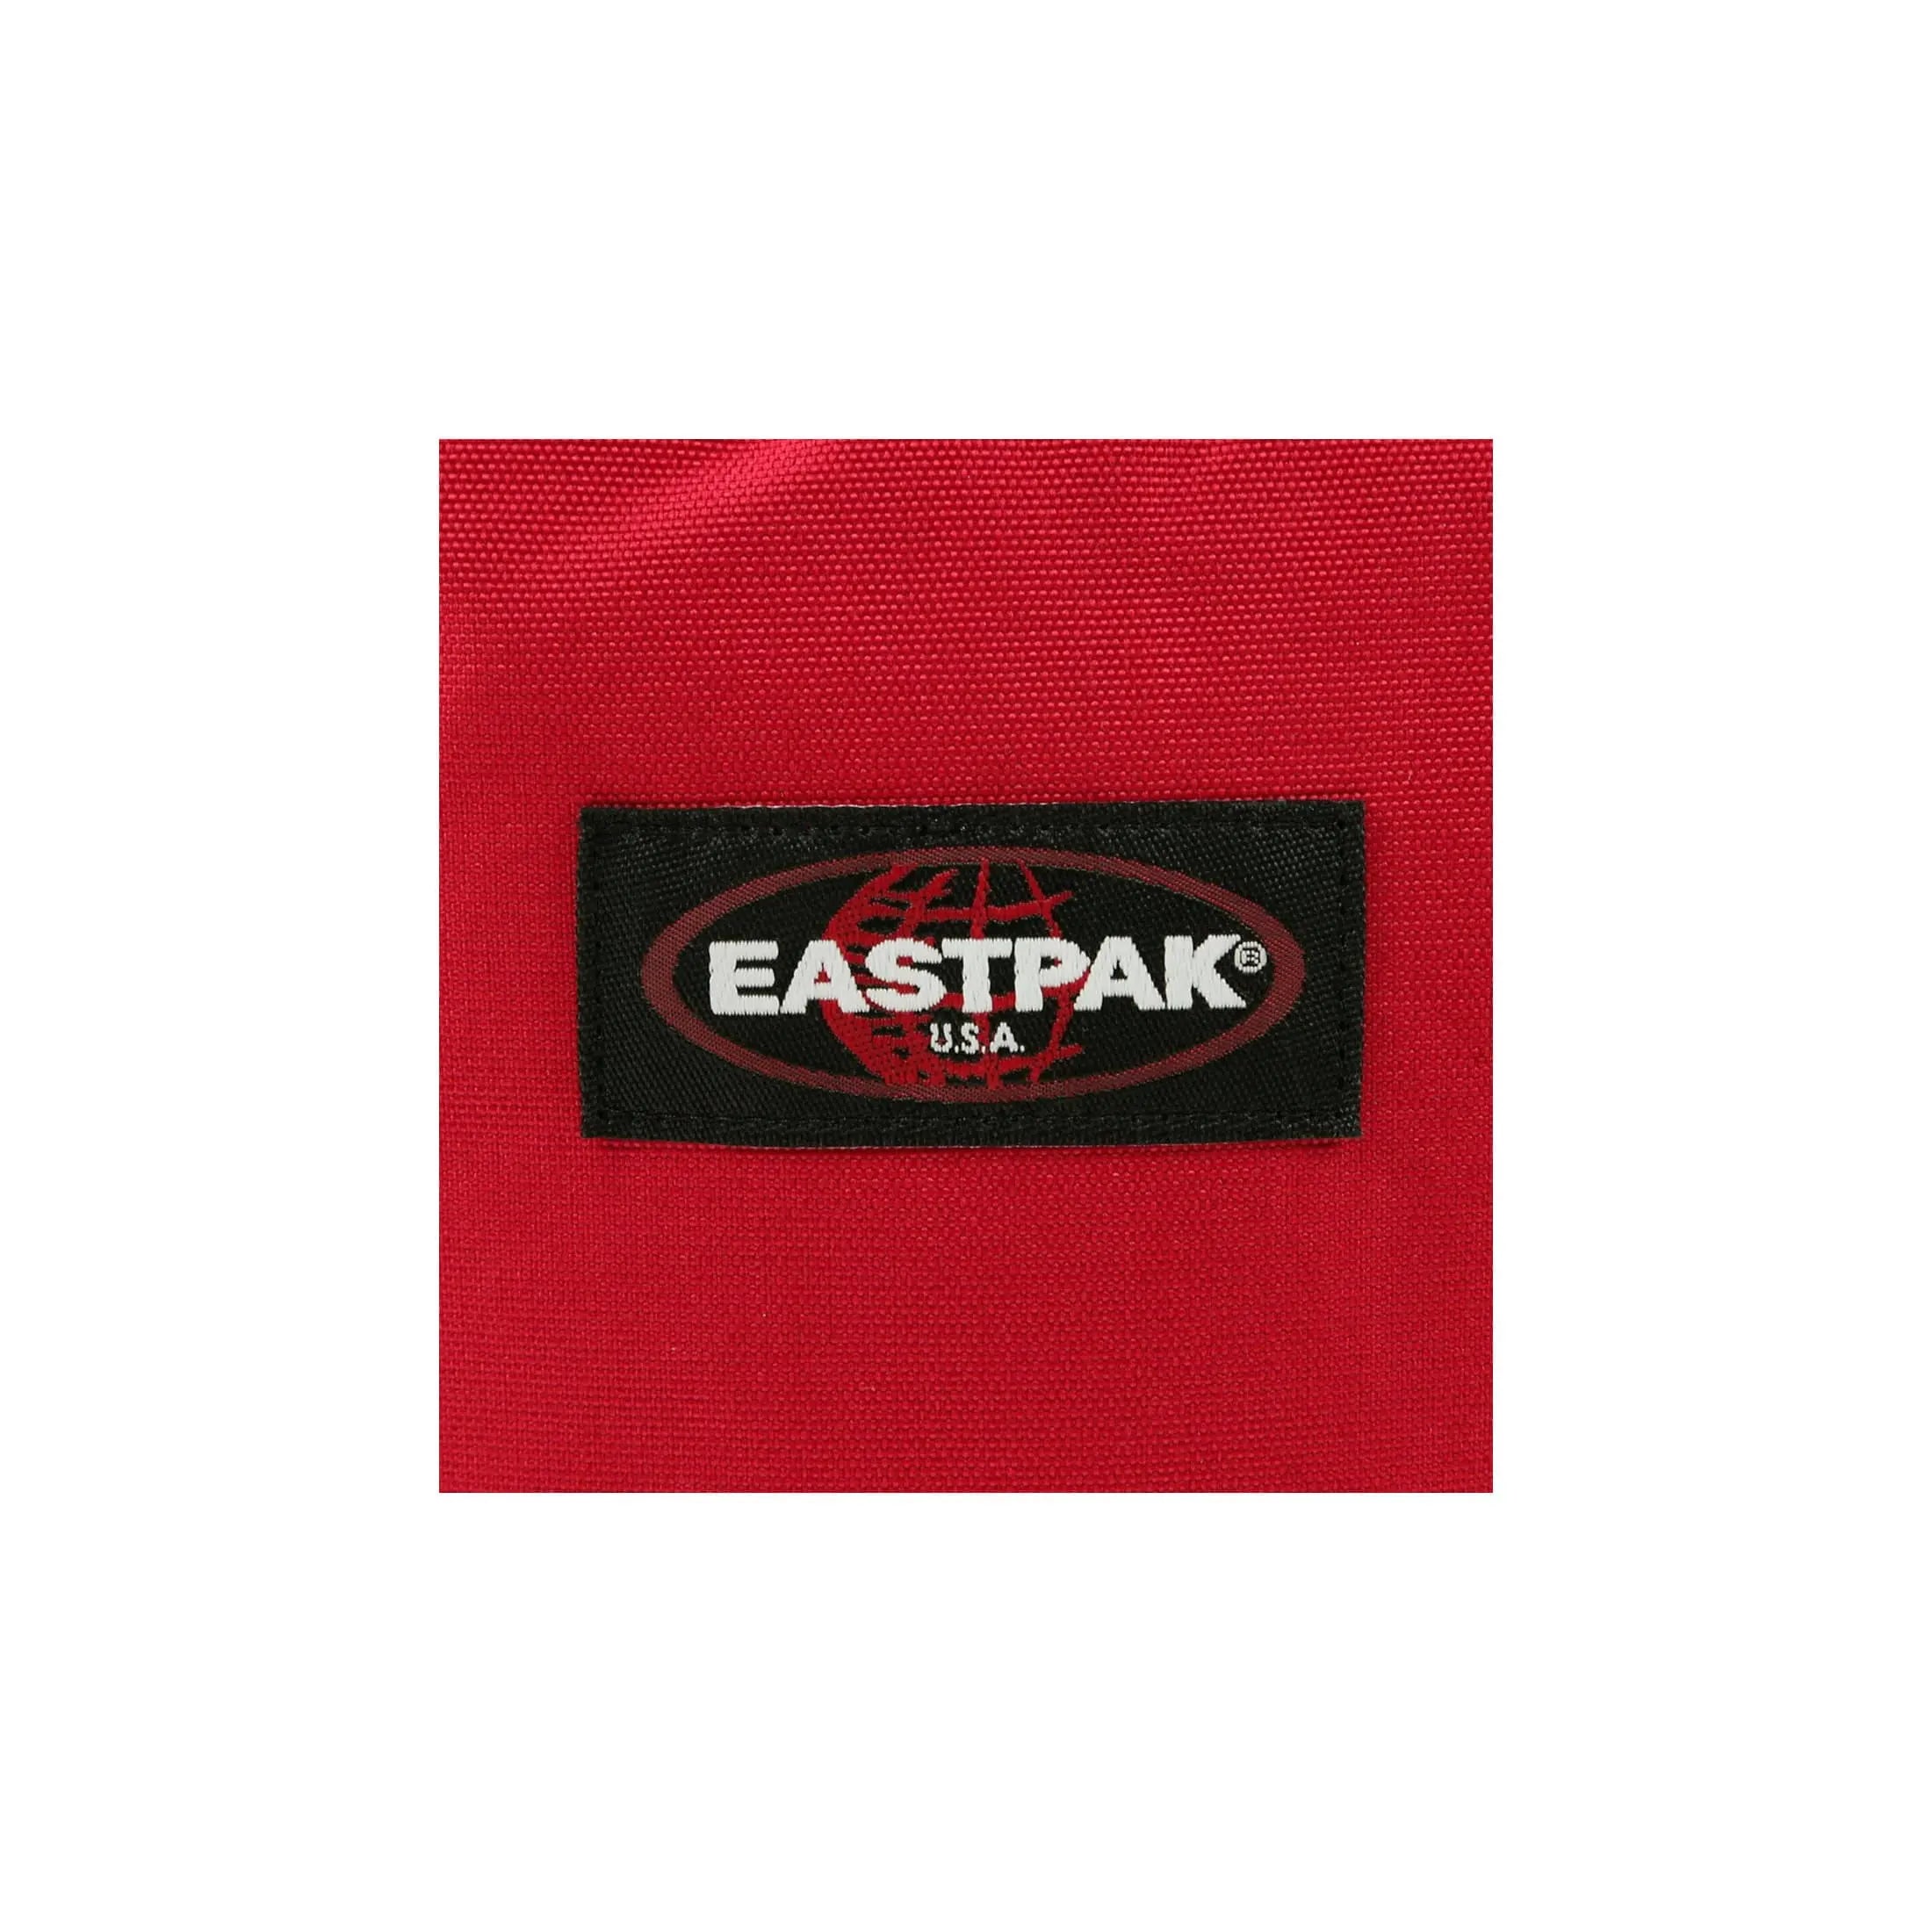 Eastpak Authentic Provider Laptop Backpack 44 cm - Ultra Marine